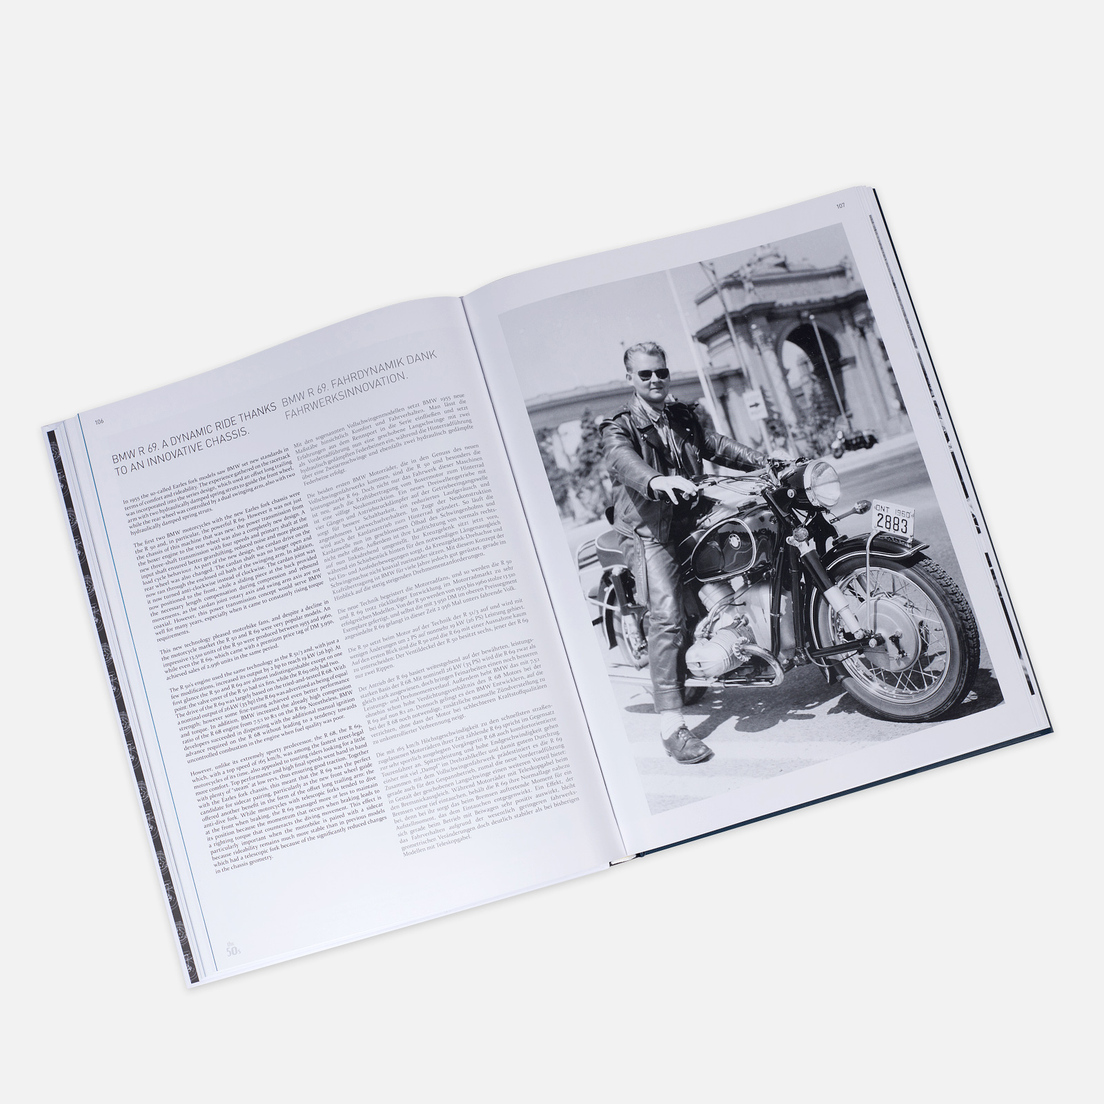 teNeues Книга BMW Motorrad: Make Life A Ride